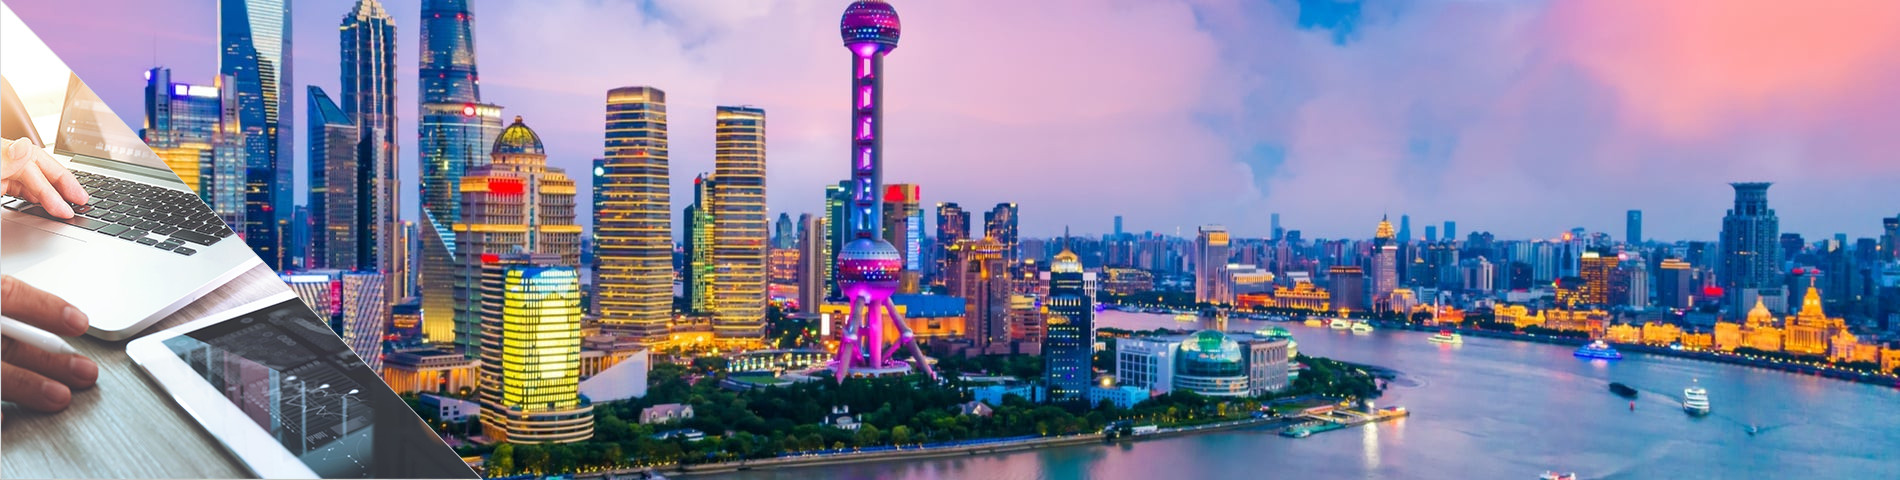 Shangai - Chino y Medios digitales